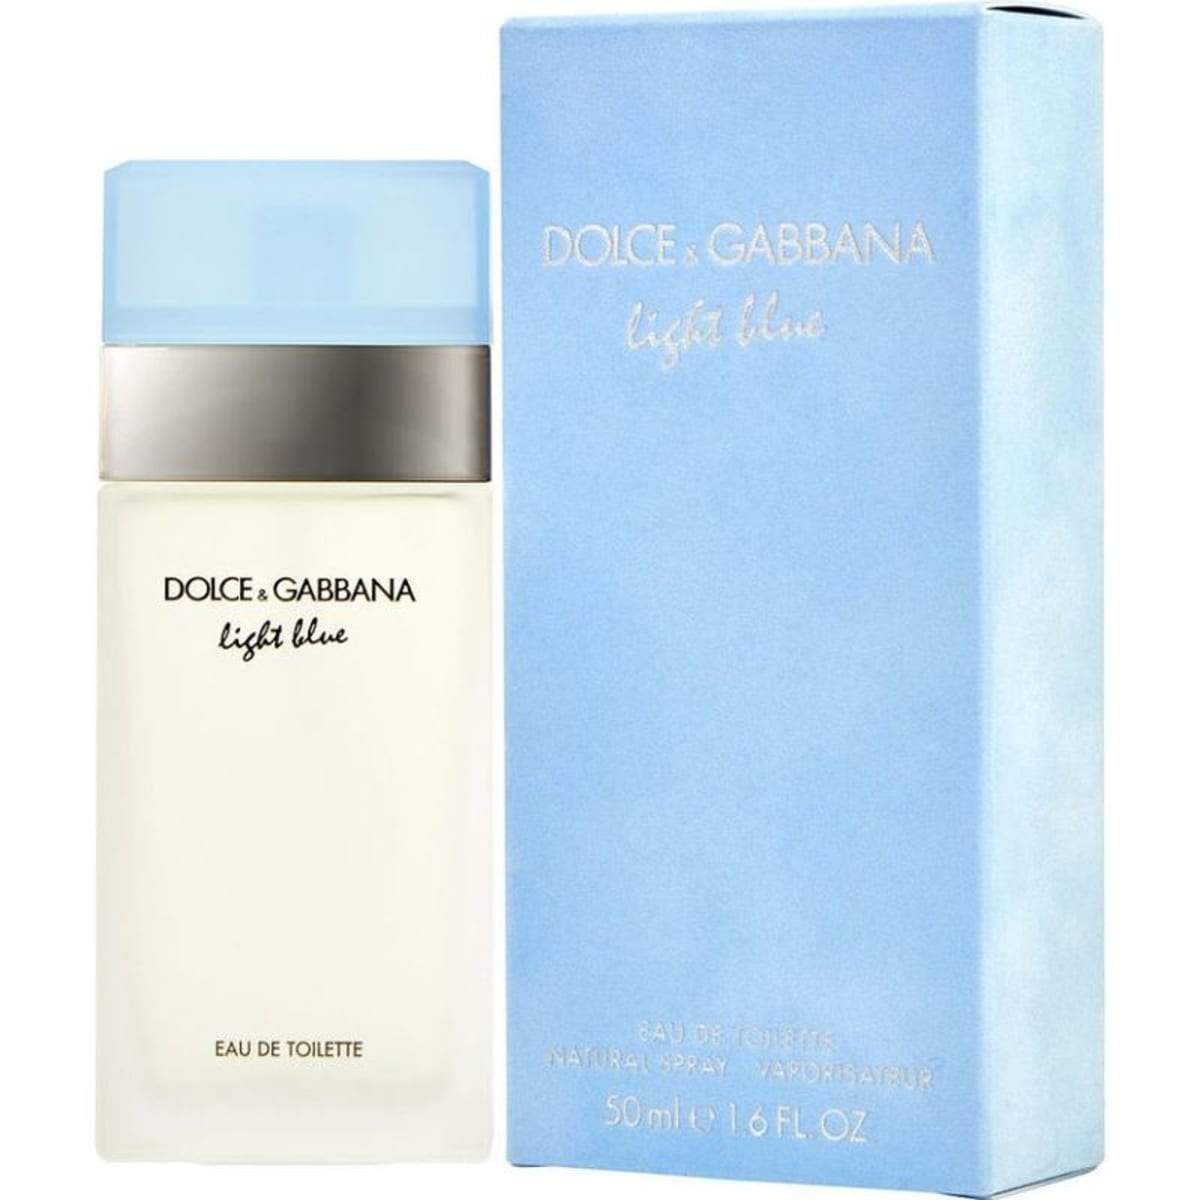 Dolce & Gabbana Light Blue by Dolce & Gabbana Women 1.6 oz Eau de Toilette Spray | FragranceBaba.com